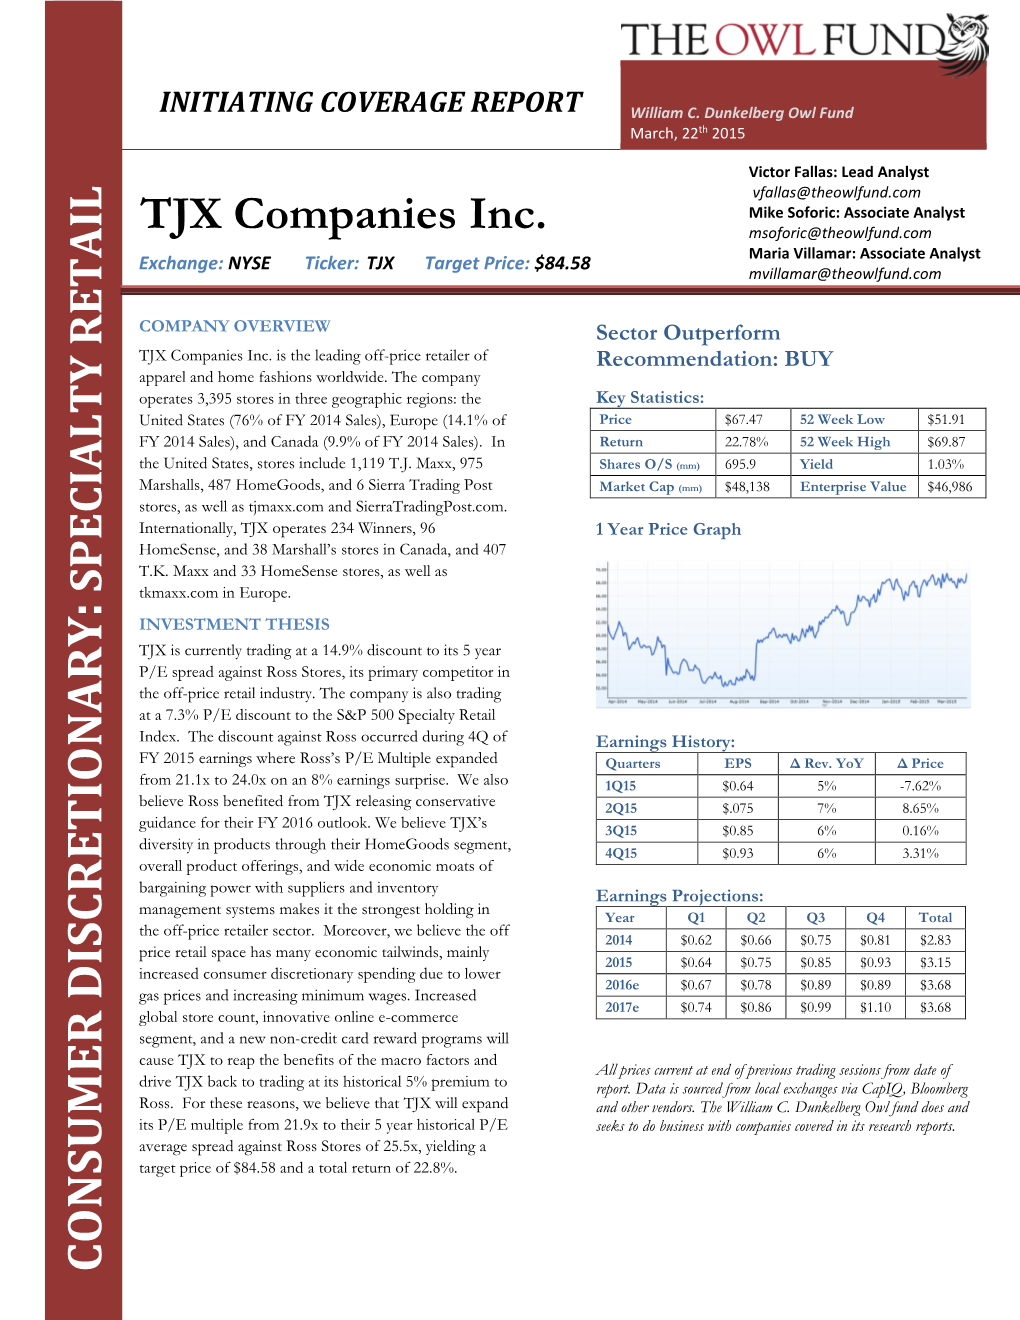 TJX Companies, Inc